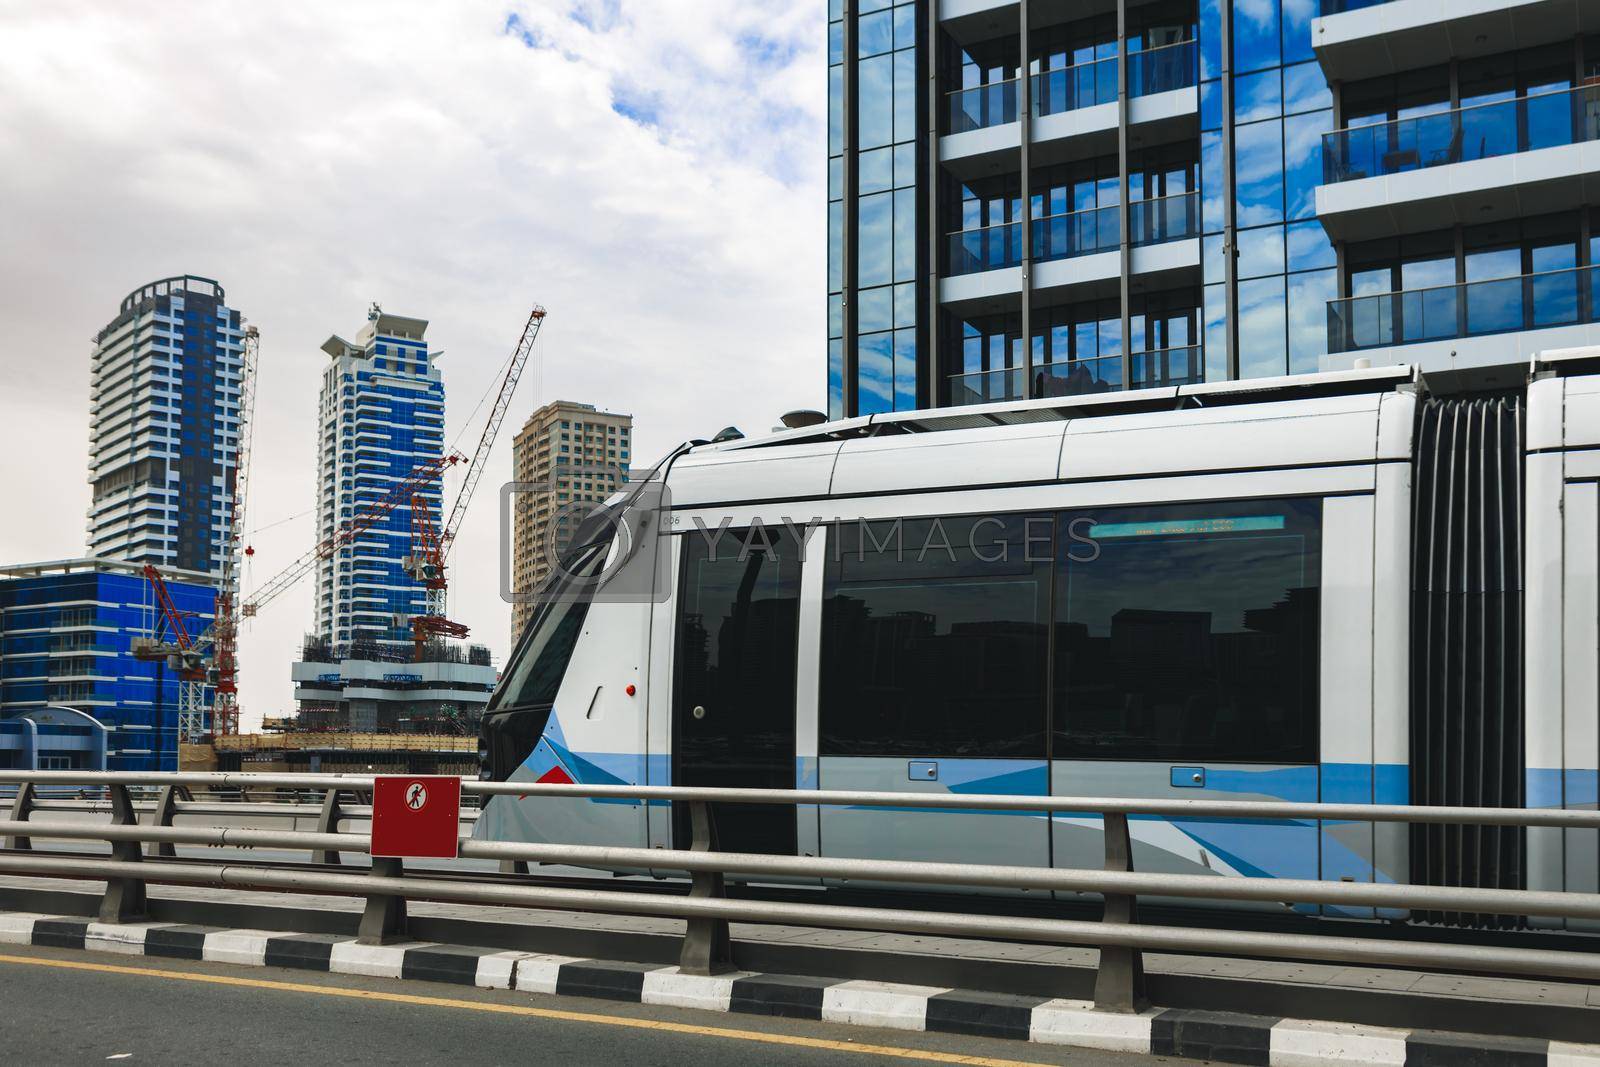 Royalty free image of Dubai Tram public transport in a street by Fabrikasimf